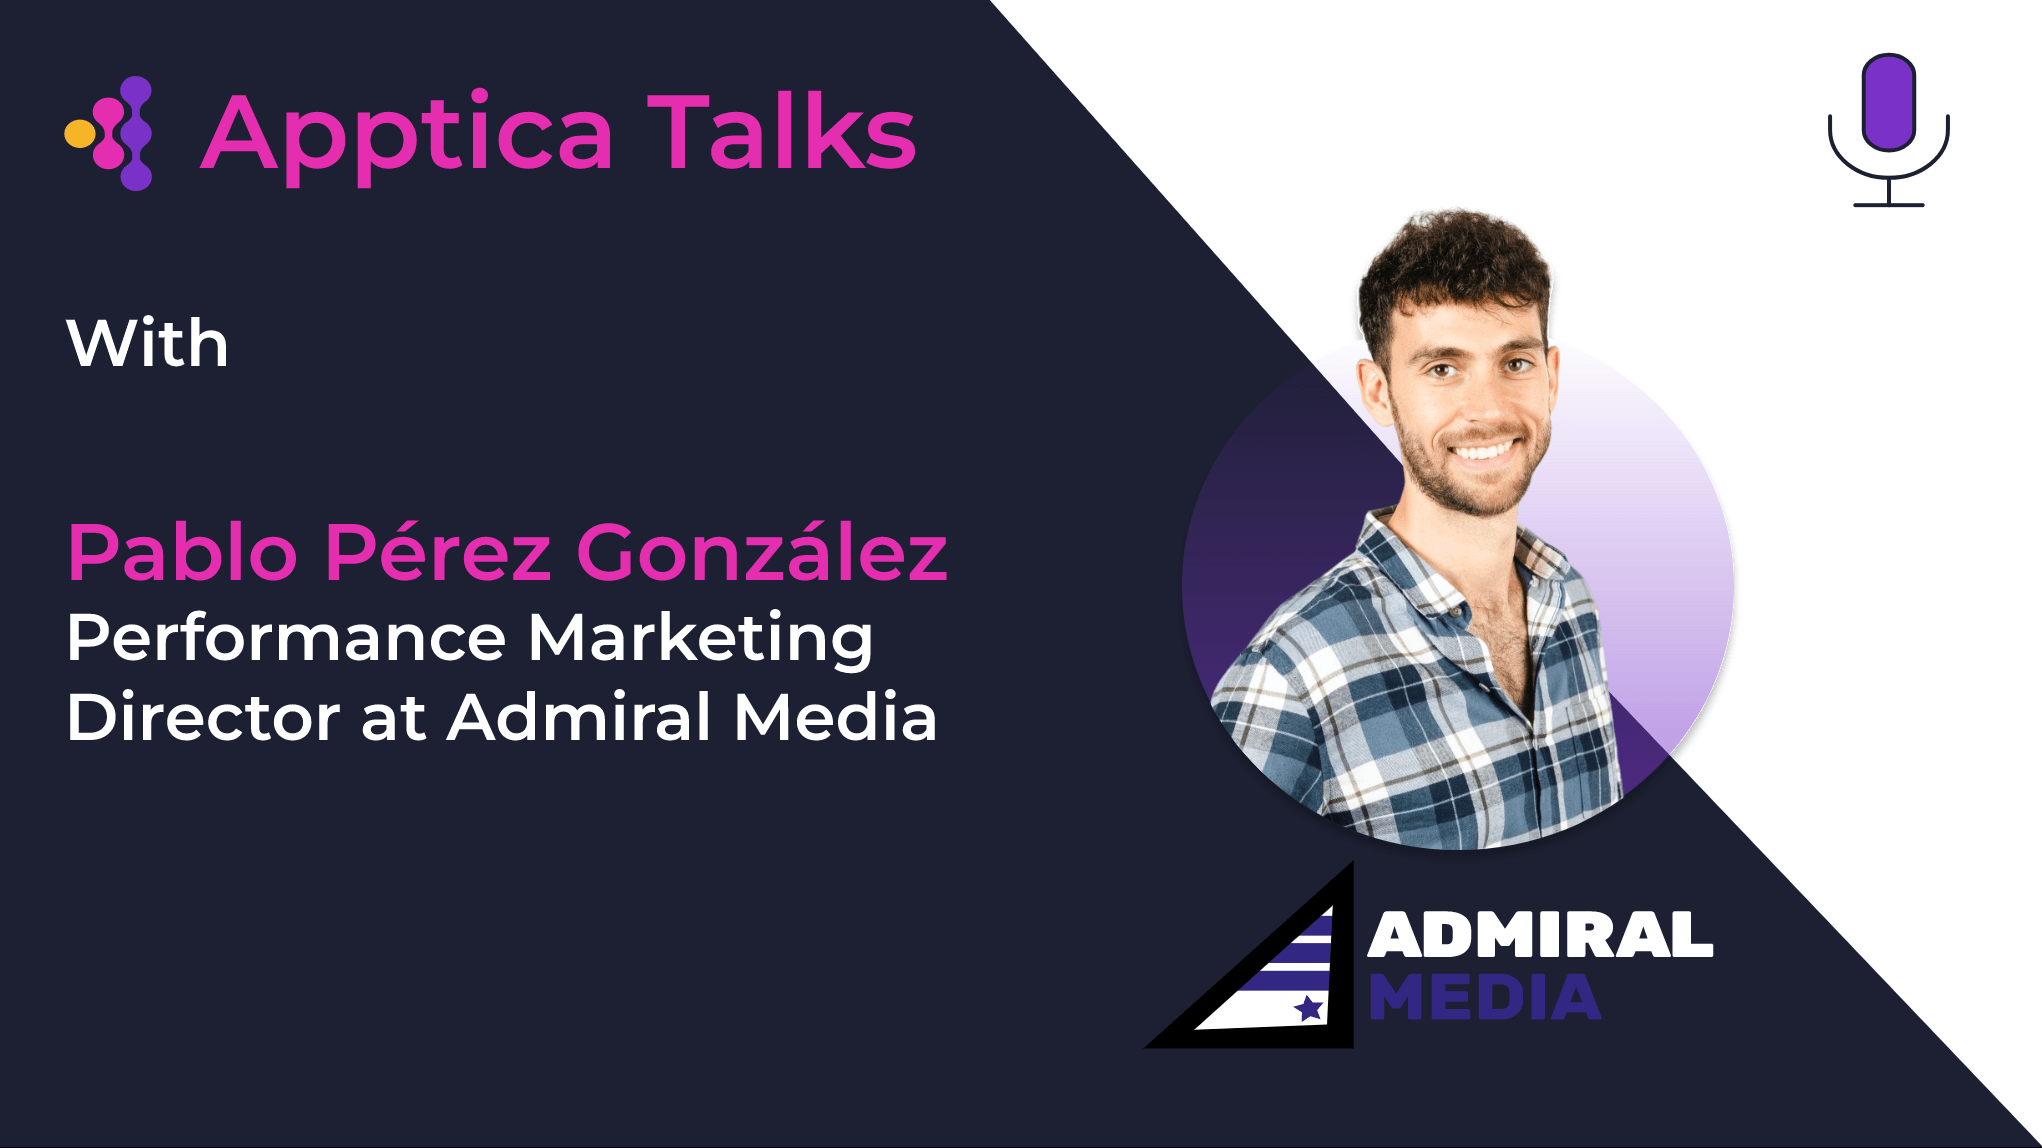 Pablo Pérez González, Performance Marketing Director at Admiral Media, speaking on Apptica Conversations Episode #4